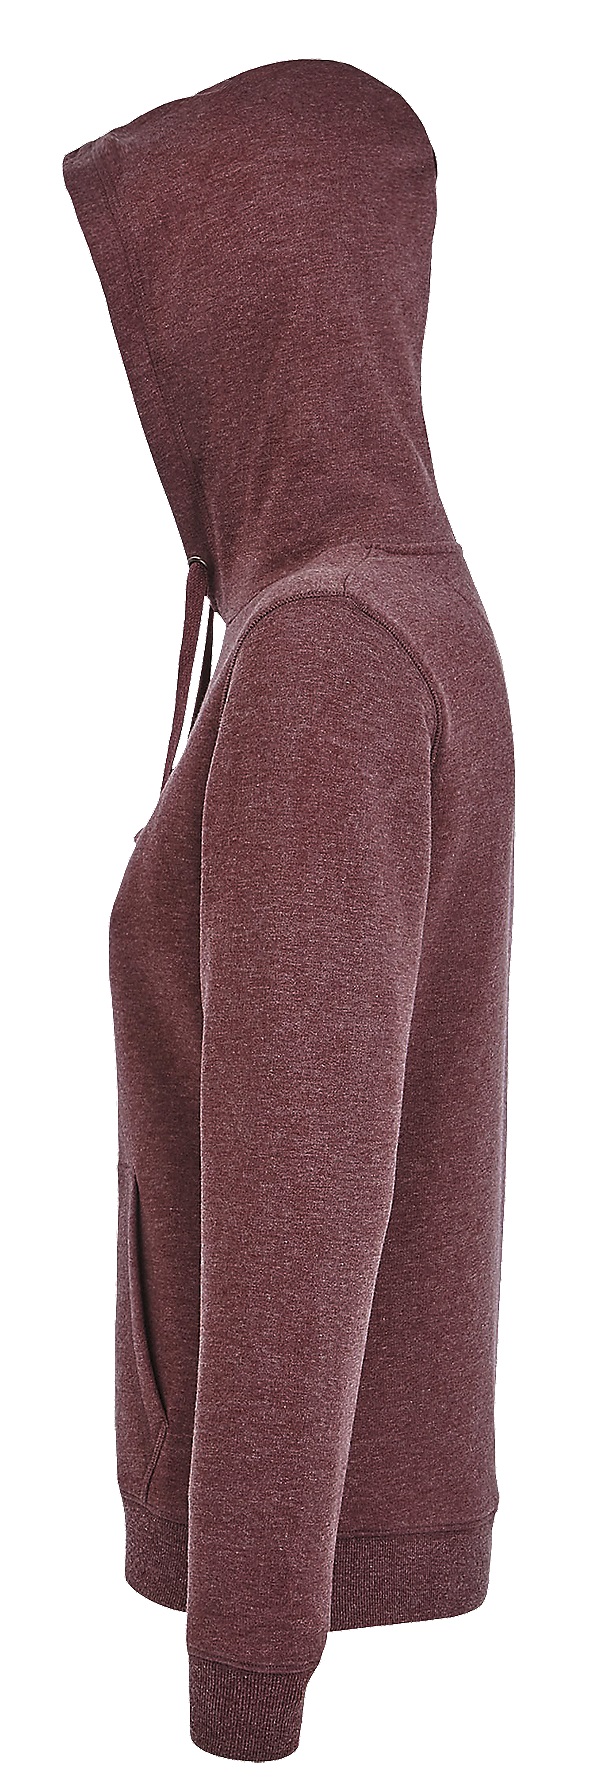 Women´s Hooded Sweatshirt Spencer L03103